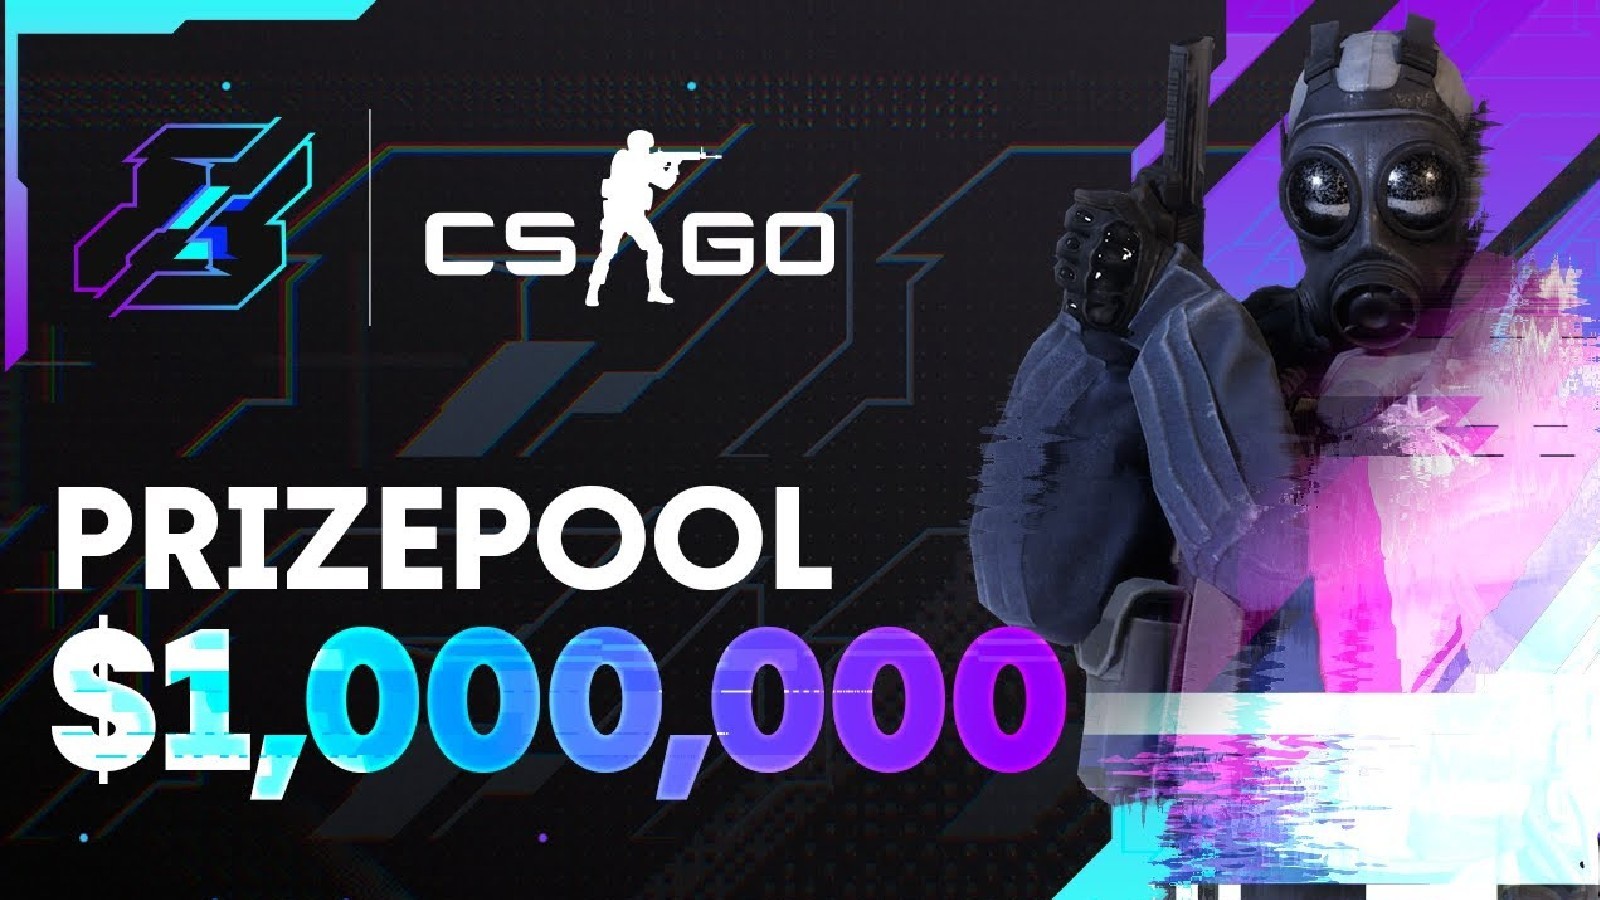 CSGO joins Gamers8 esports lineup with $1 million tournament - Dexerto